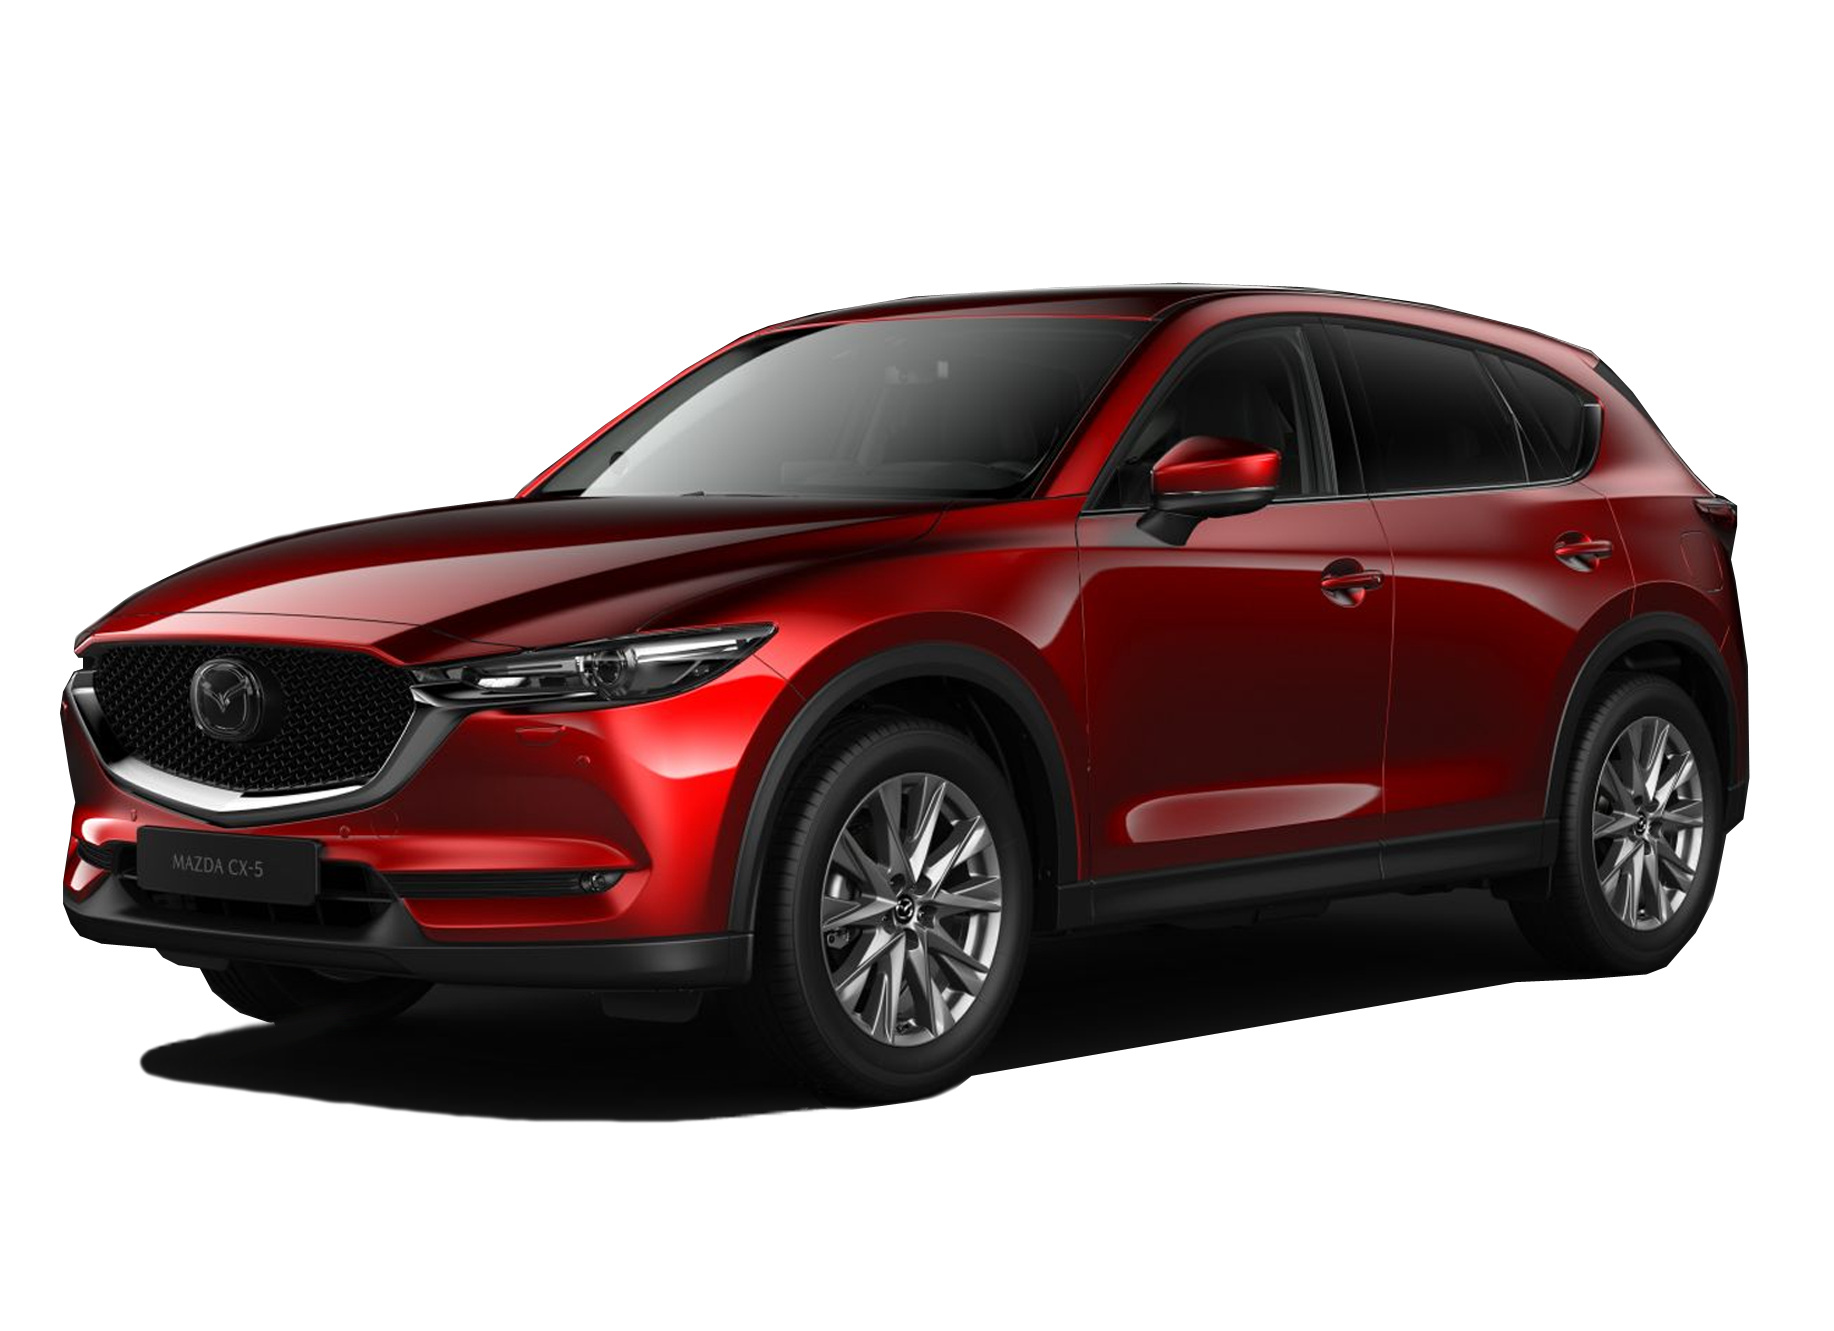 Mazda CX-5 KF 2017. Mazda CX-5 2024. Мазда СХ-5 2013 красный. Mazda cx5 kf